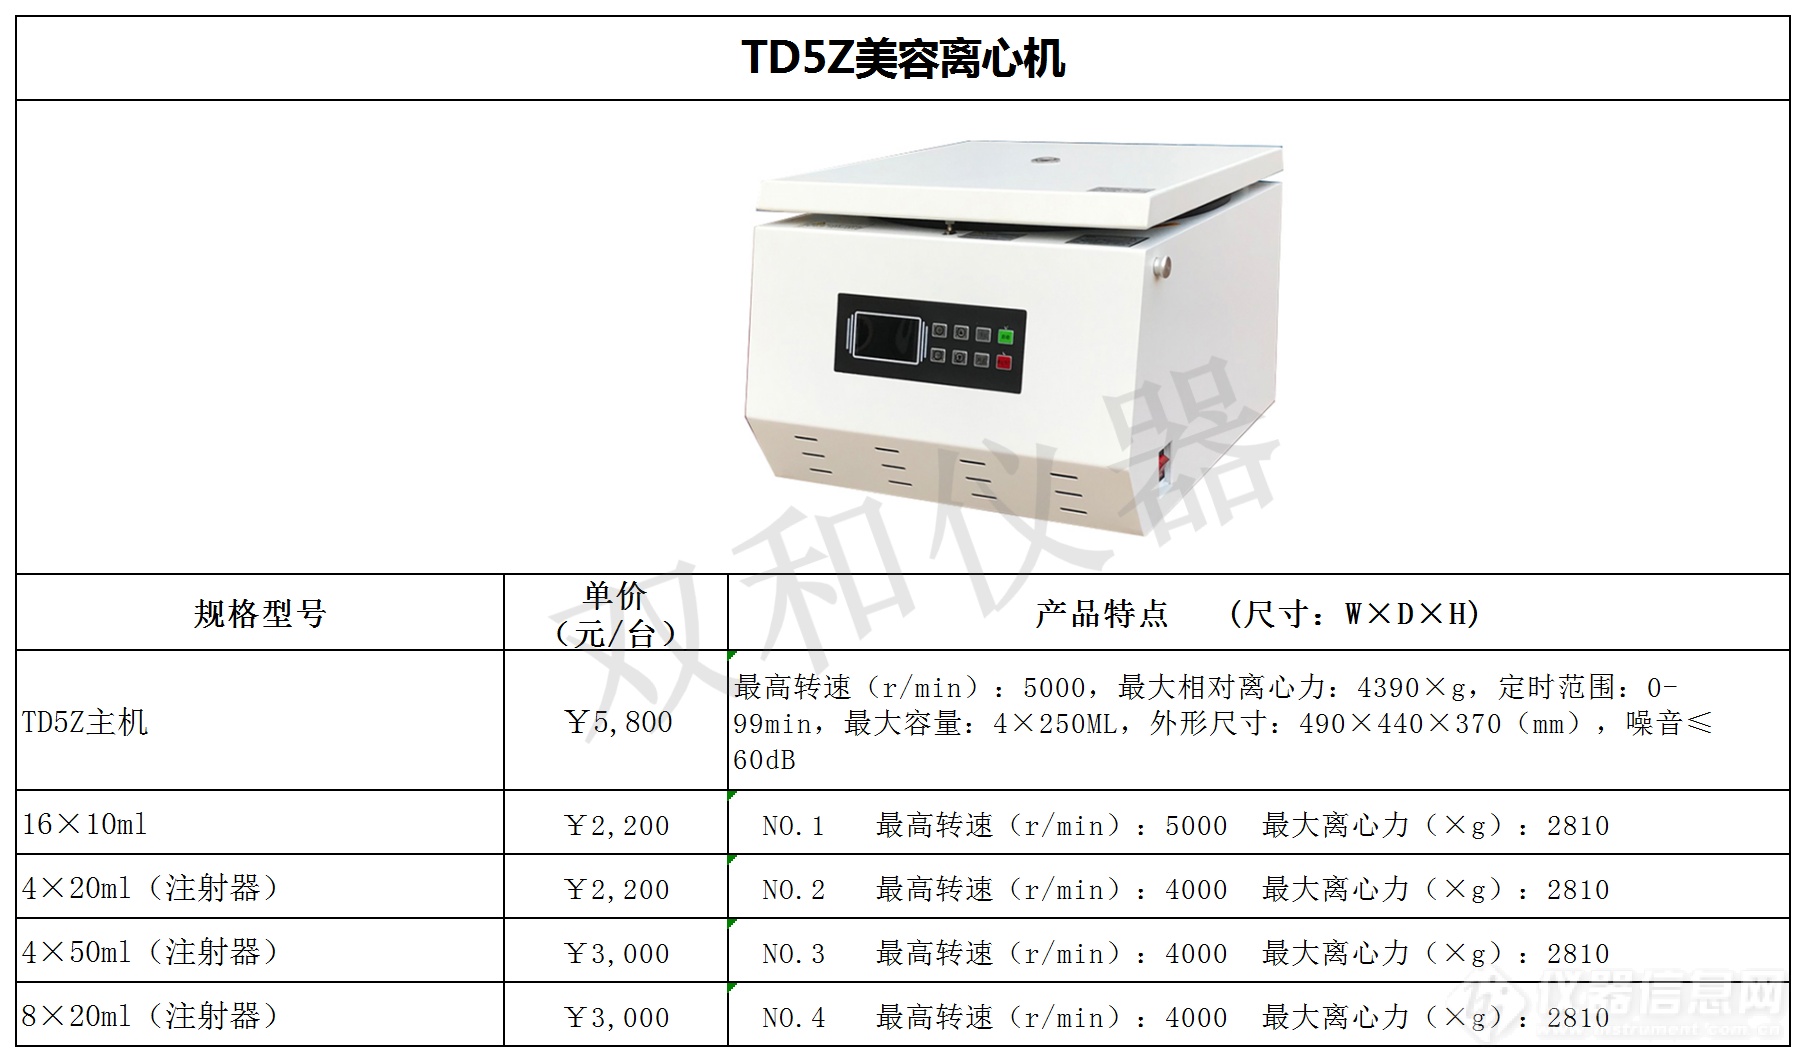 TD5Z产品图片详情.png